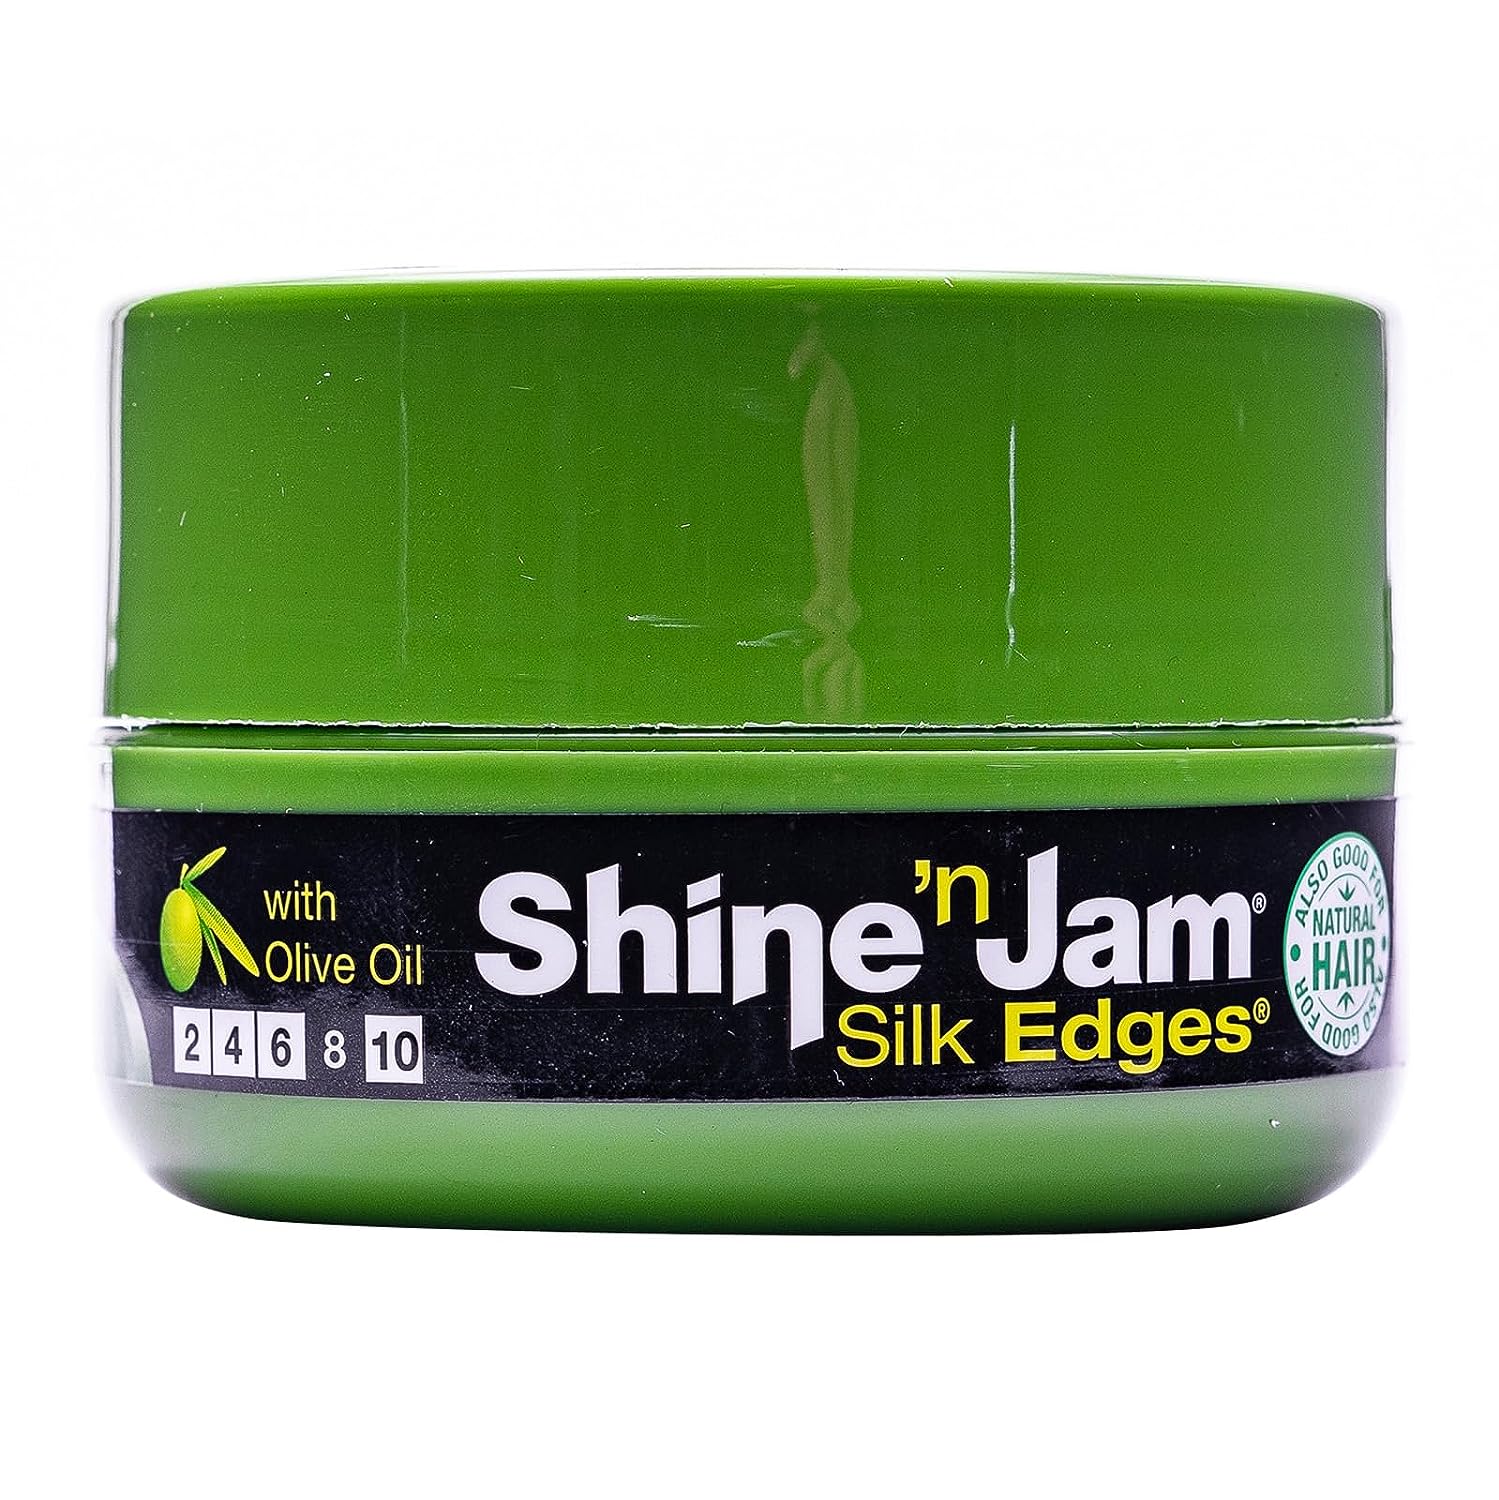 Ampro Shine 'n Jam Silk Edges With Olive Oil 2.25 oz